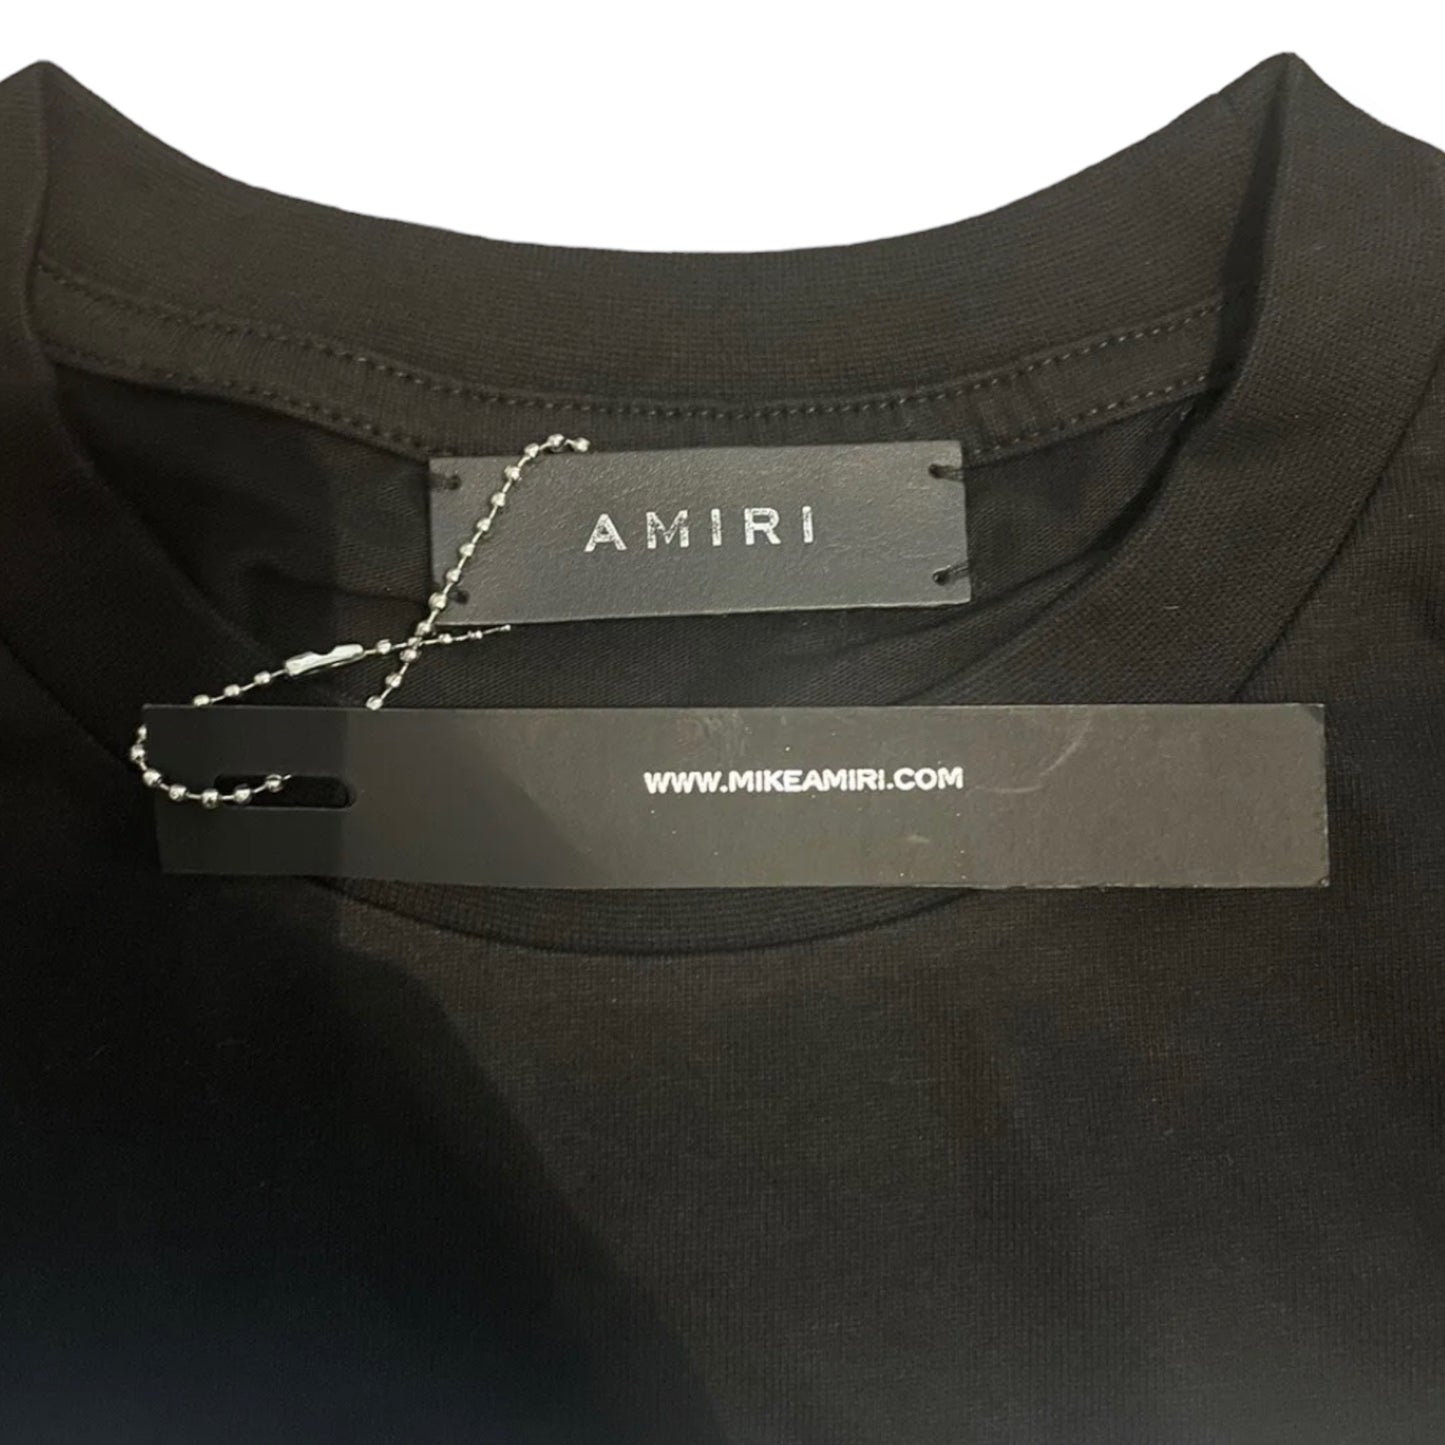 Brand New Amiri Black Tshirt Size XL